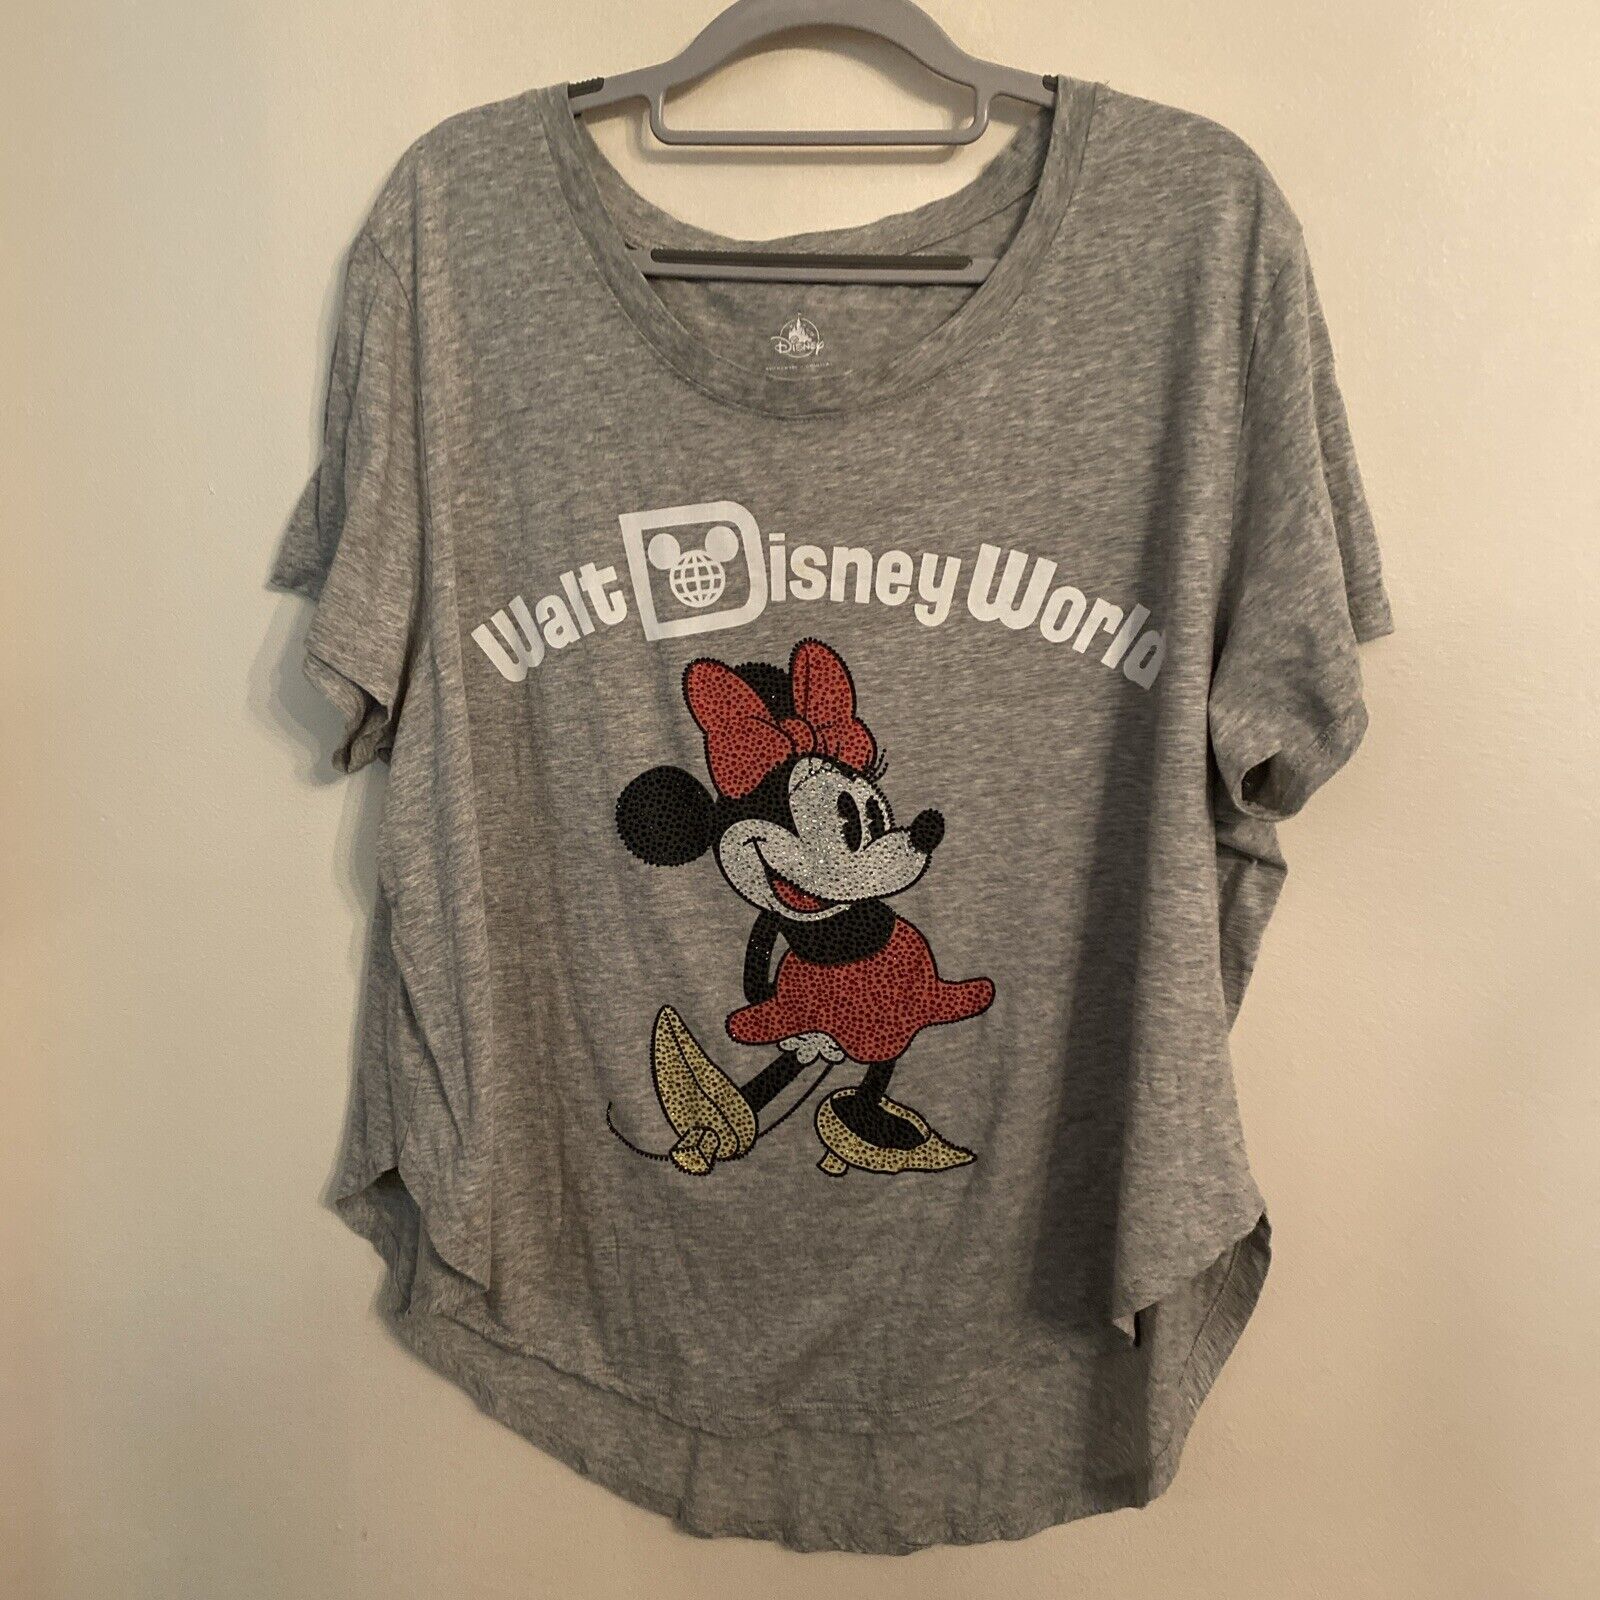 Walt Disney World tee shirt Size 1X